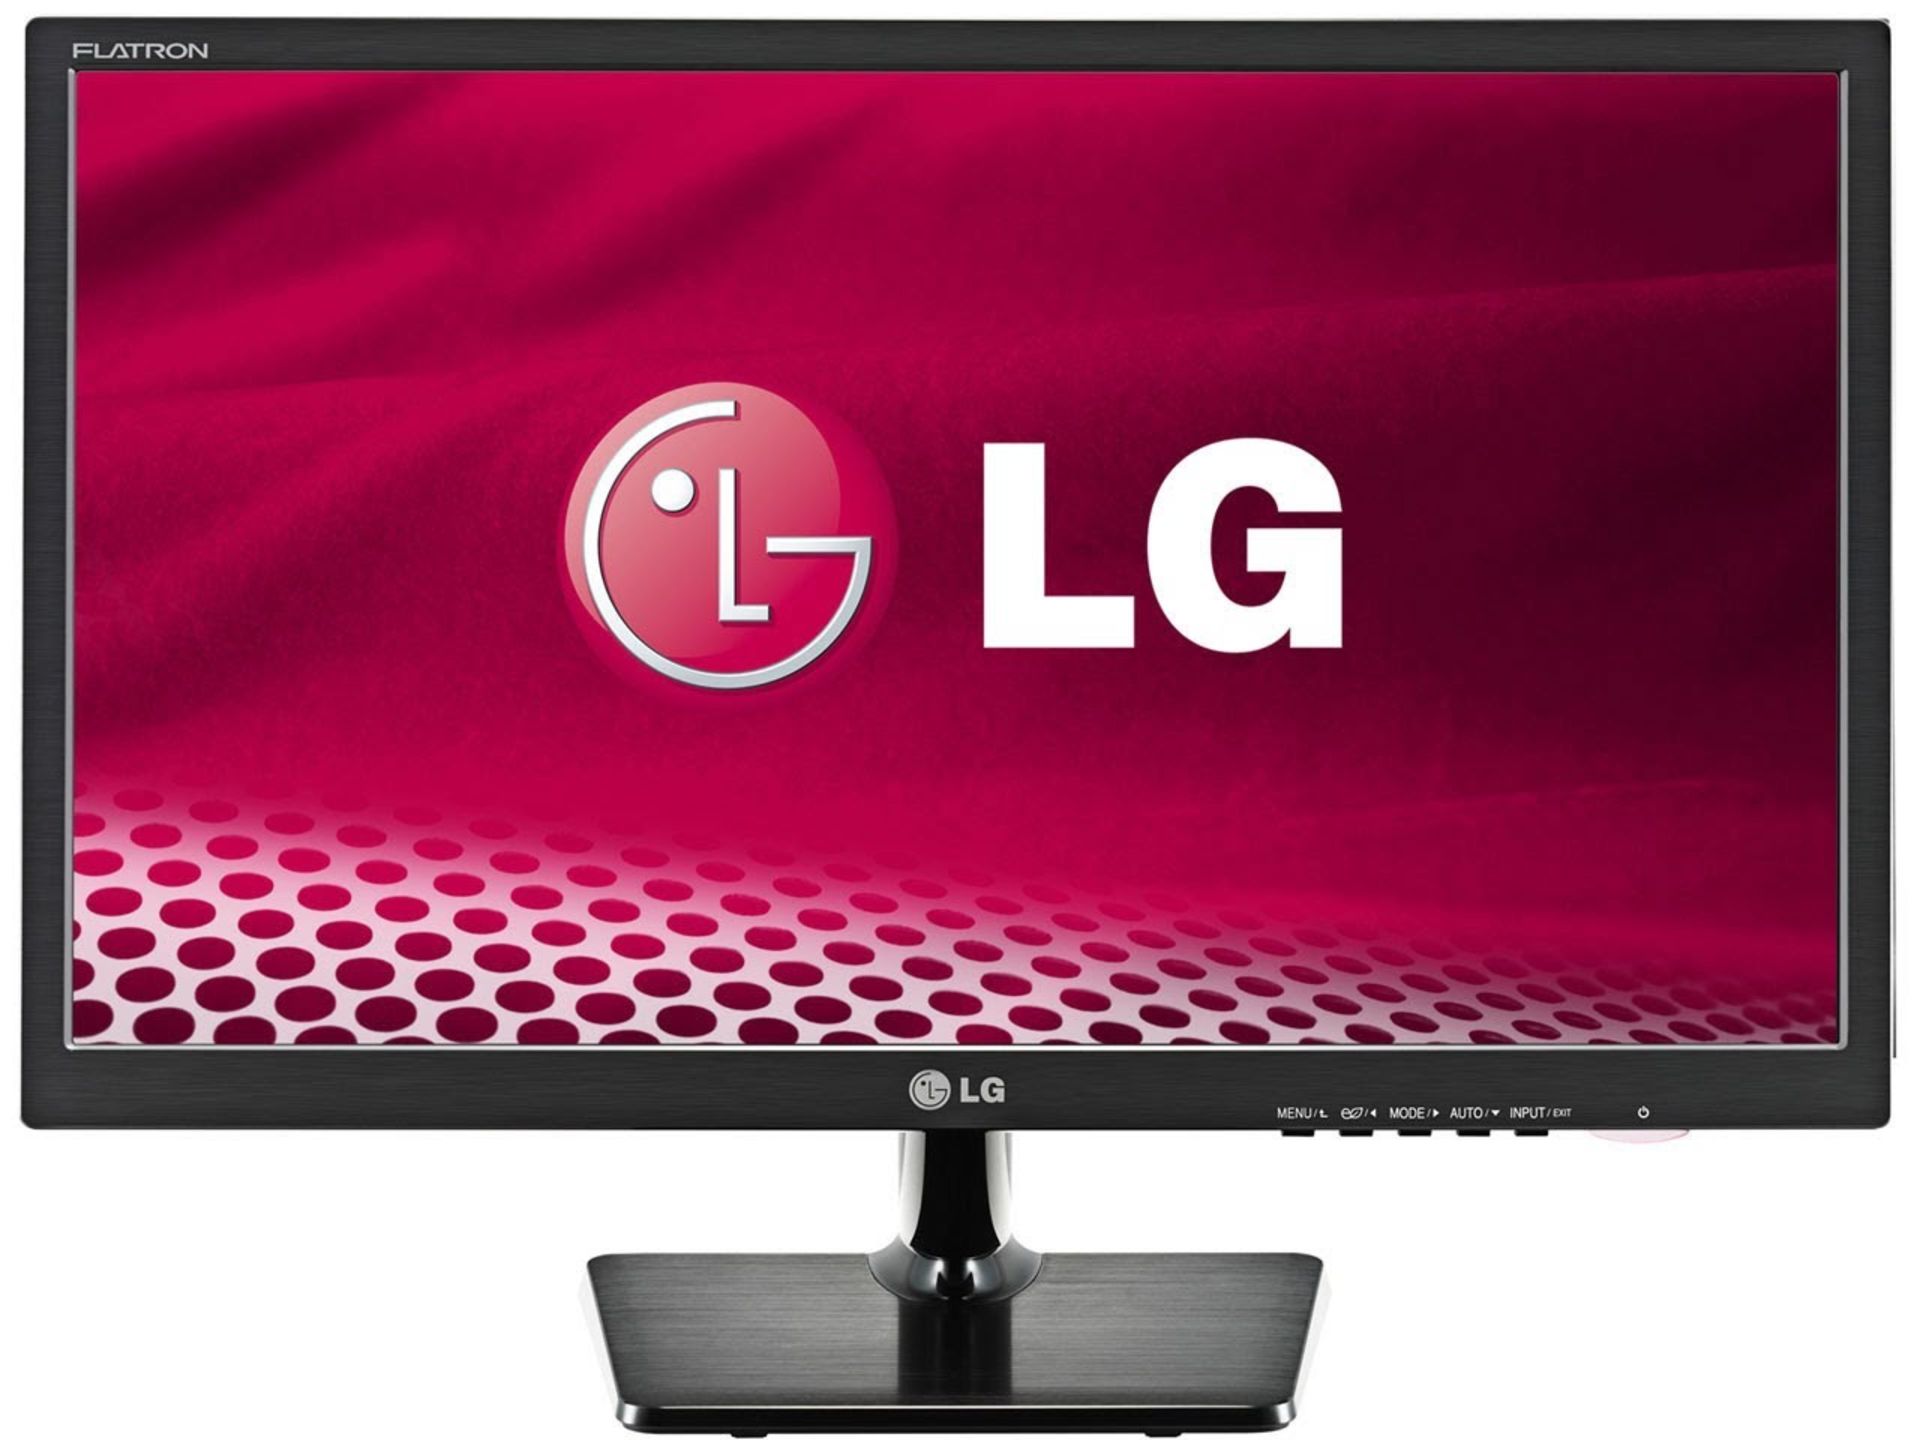 1 x LG 24" Full HD LED Monitor - Model LE2442V-BN - Resolution 1920 x 1080 - Inputs DVI, VGA, HDMI -